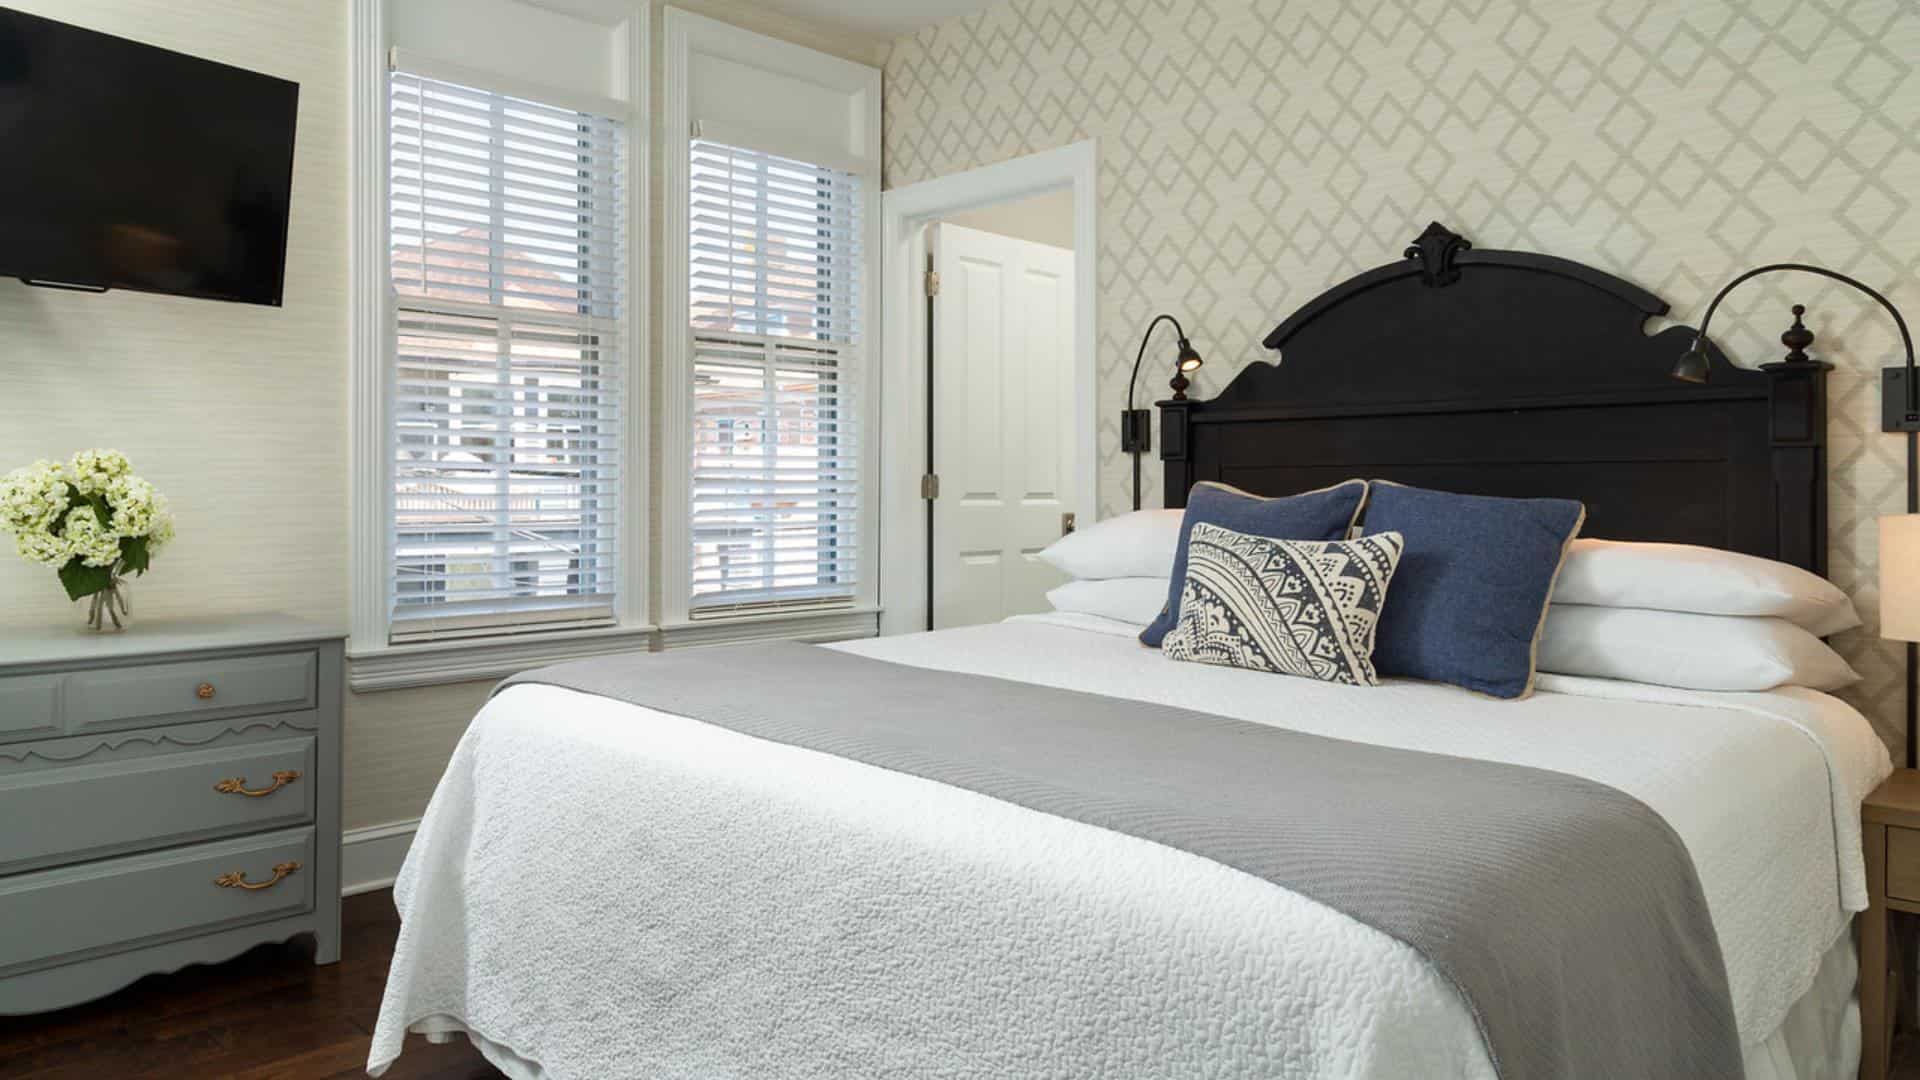 Bedroom with dark wooden headboard, white bedding, gray blanket, hardwood flooring, gray dresser, and modern wallpaper